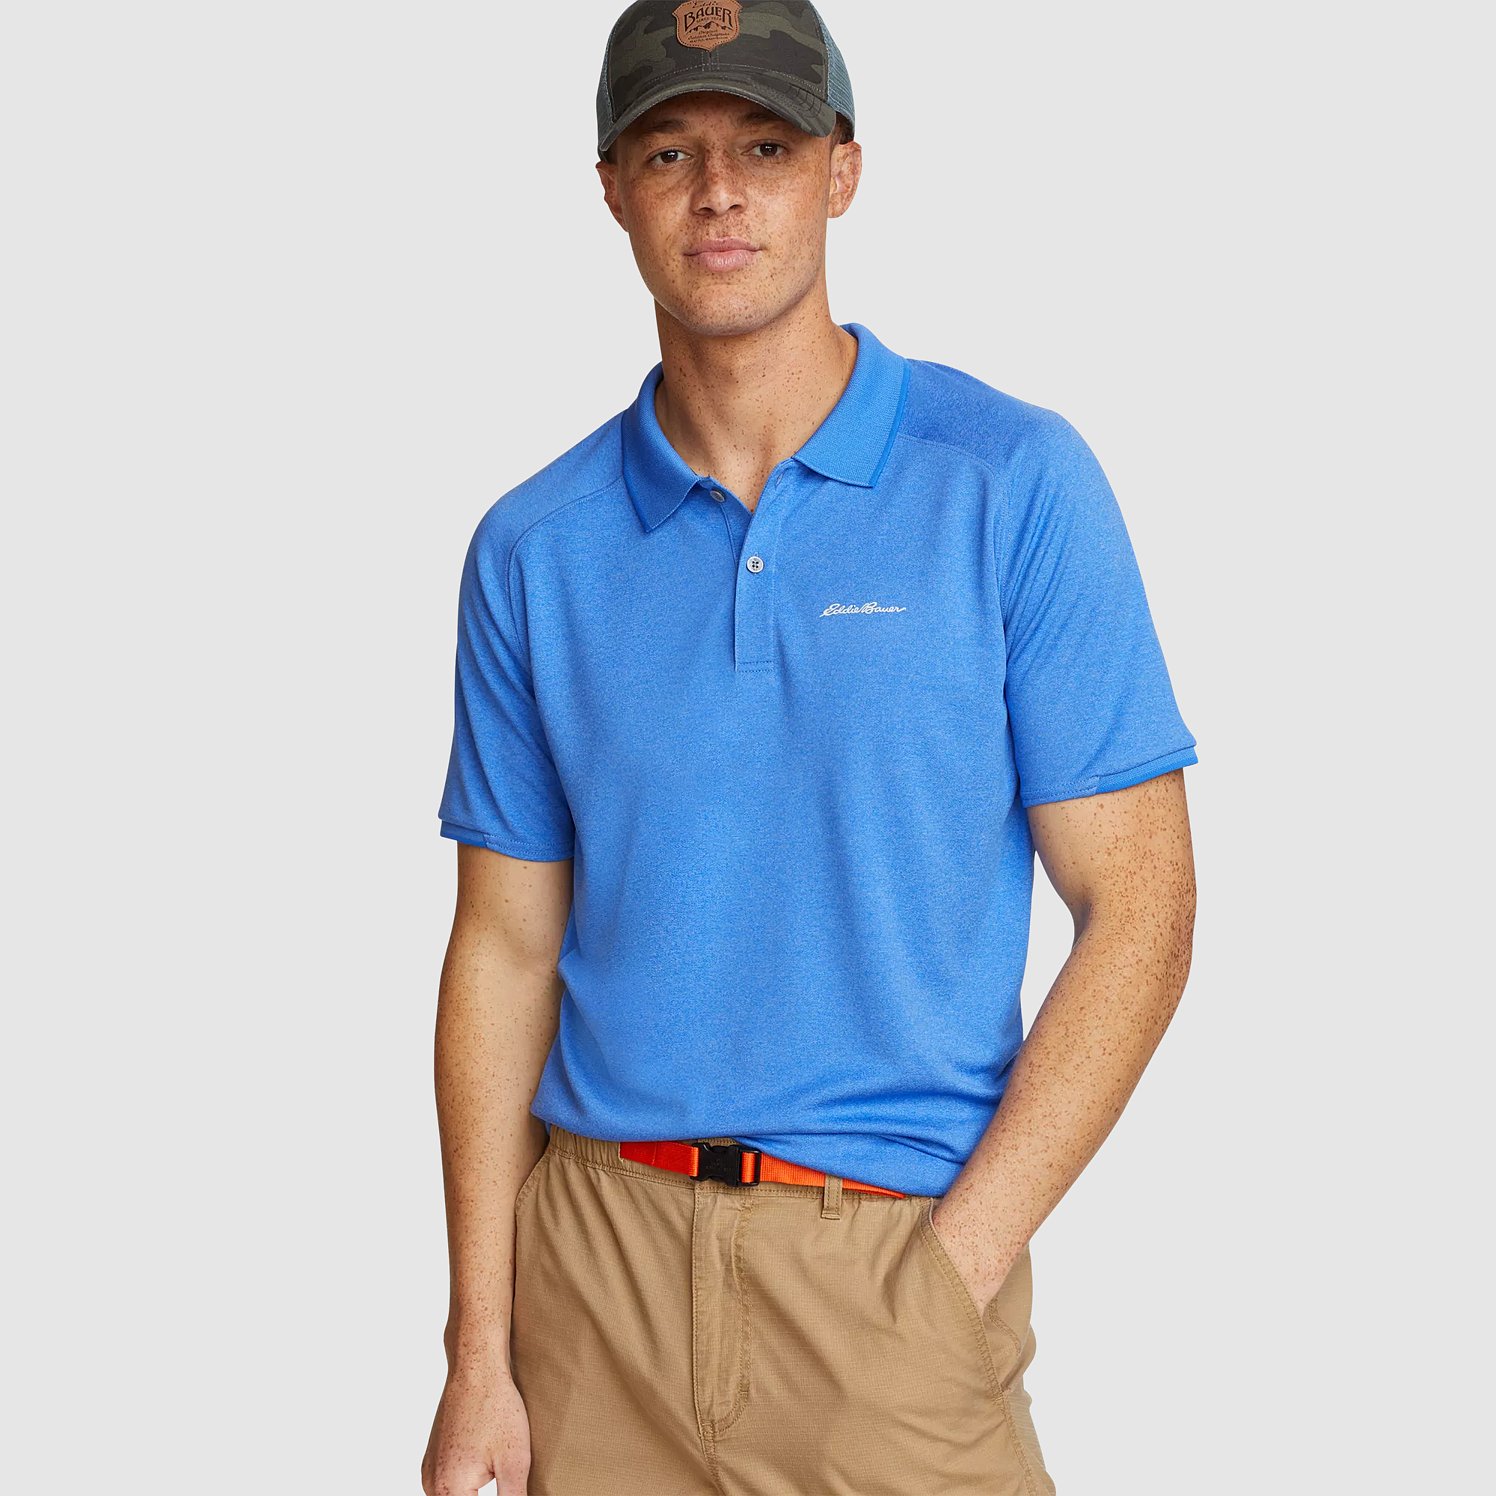 Eddie Bauer Men's UPF Guide 2.0 Short-Sleeve Shirt - Light Gray - Size L